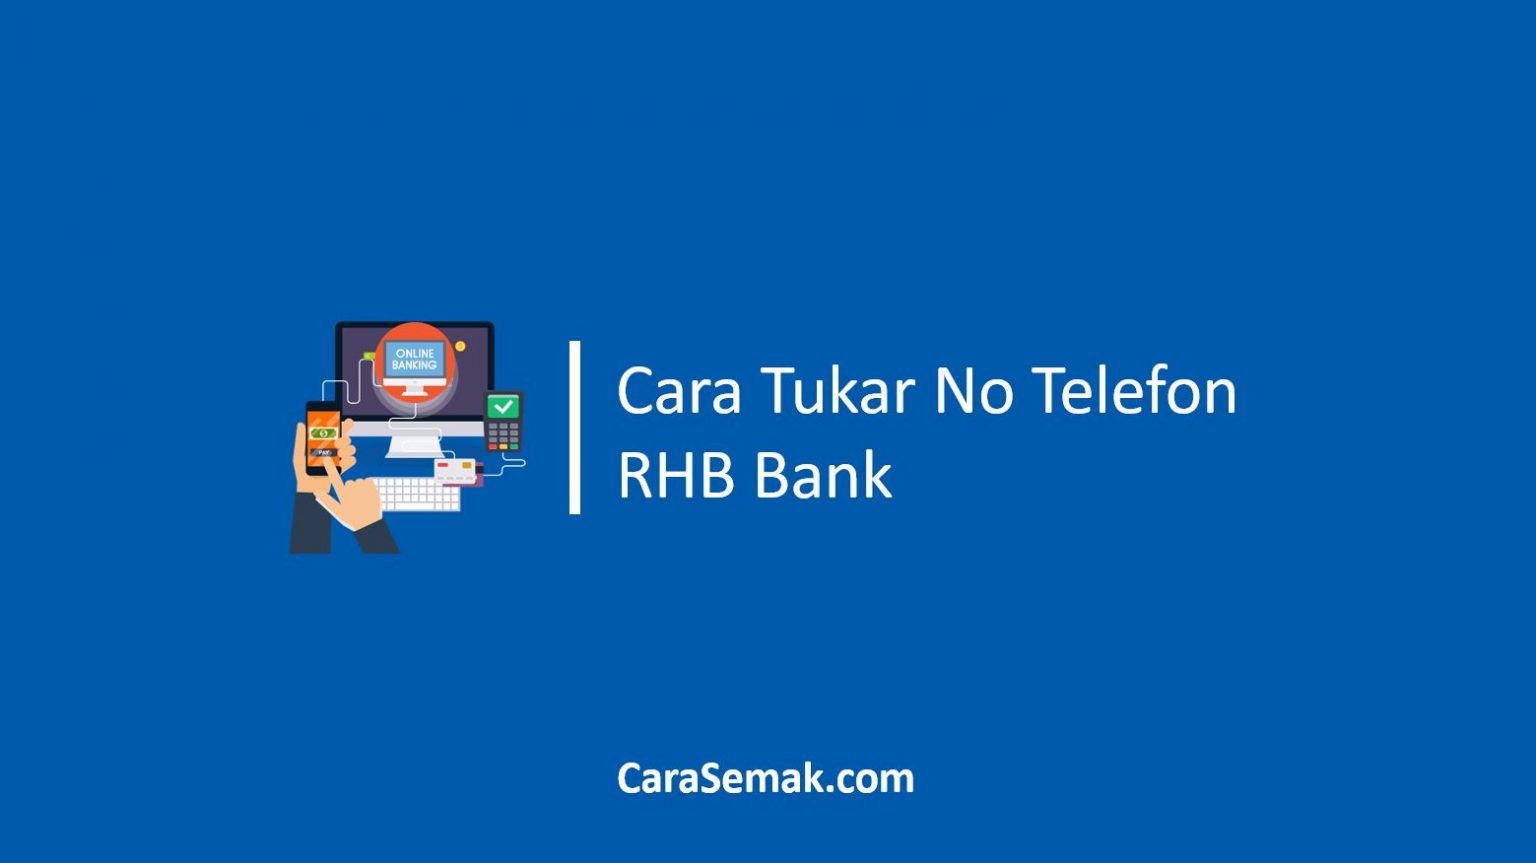 √ Cara Tukar No Telefon RHB Bank Kemaskini Online